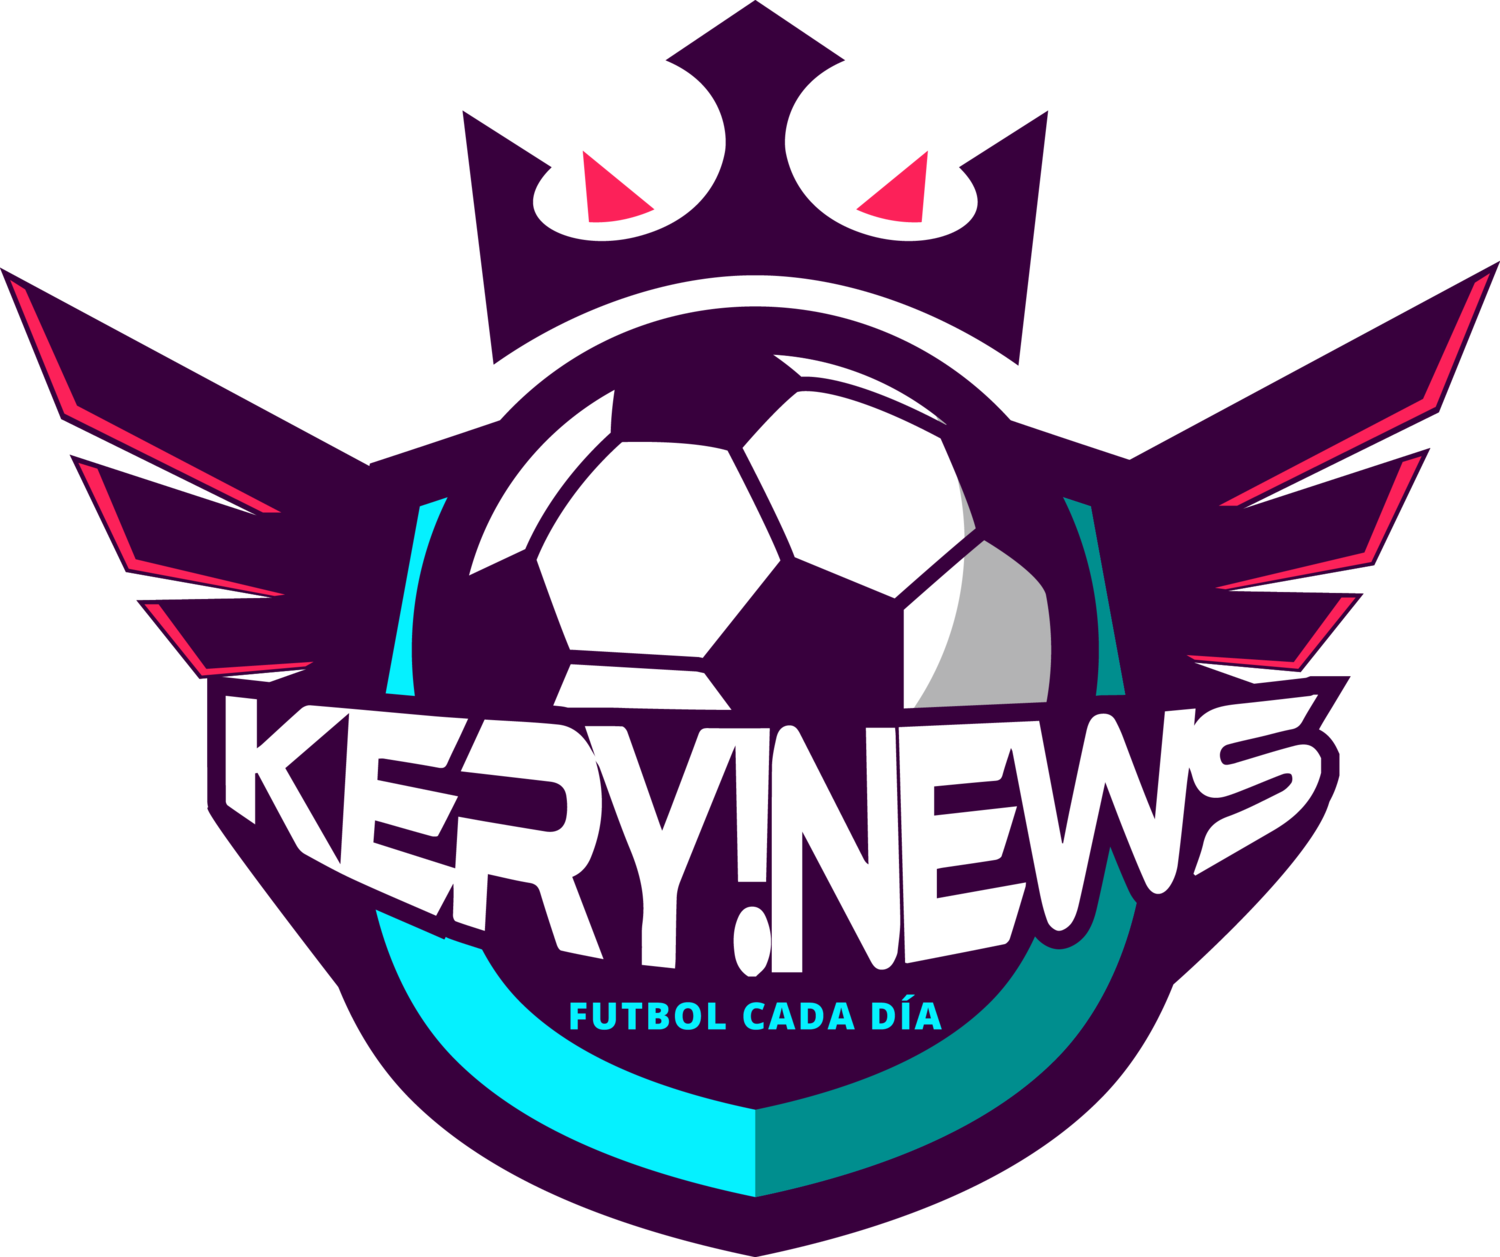 Kerynews - Noticias de futbol